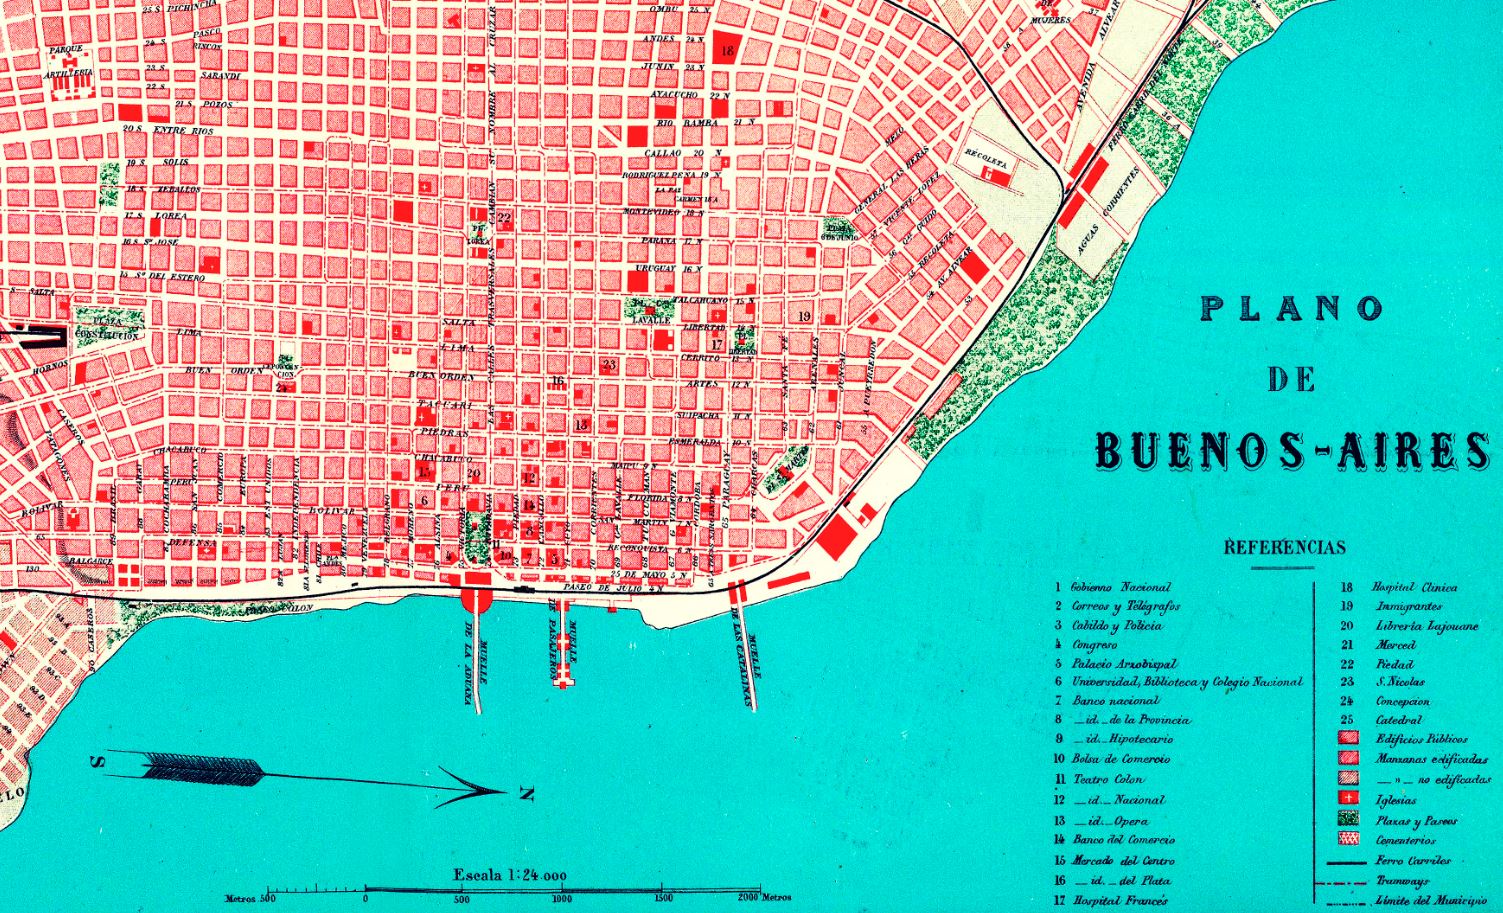 Plano de Buenos Aires de 1887